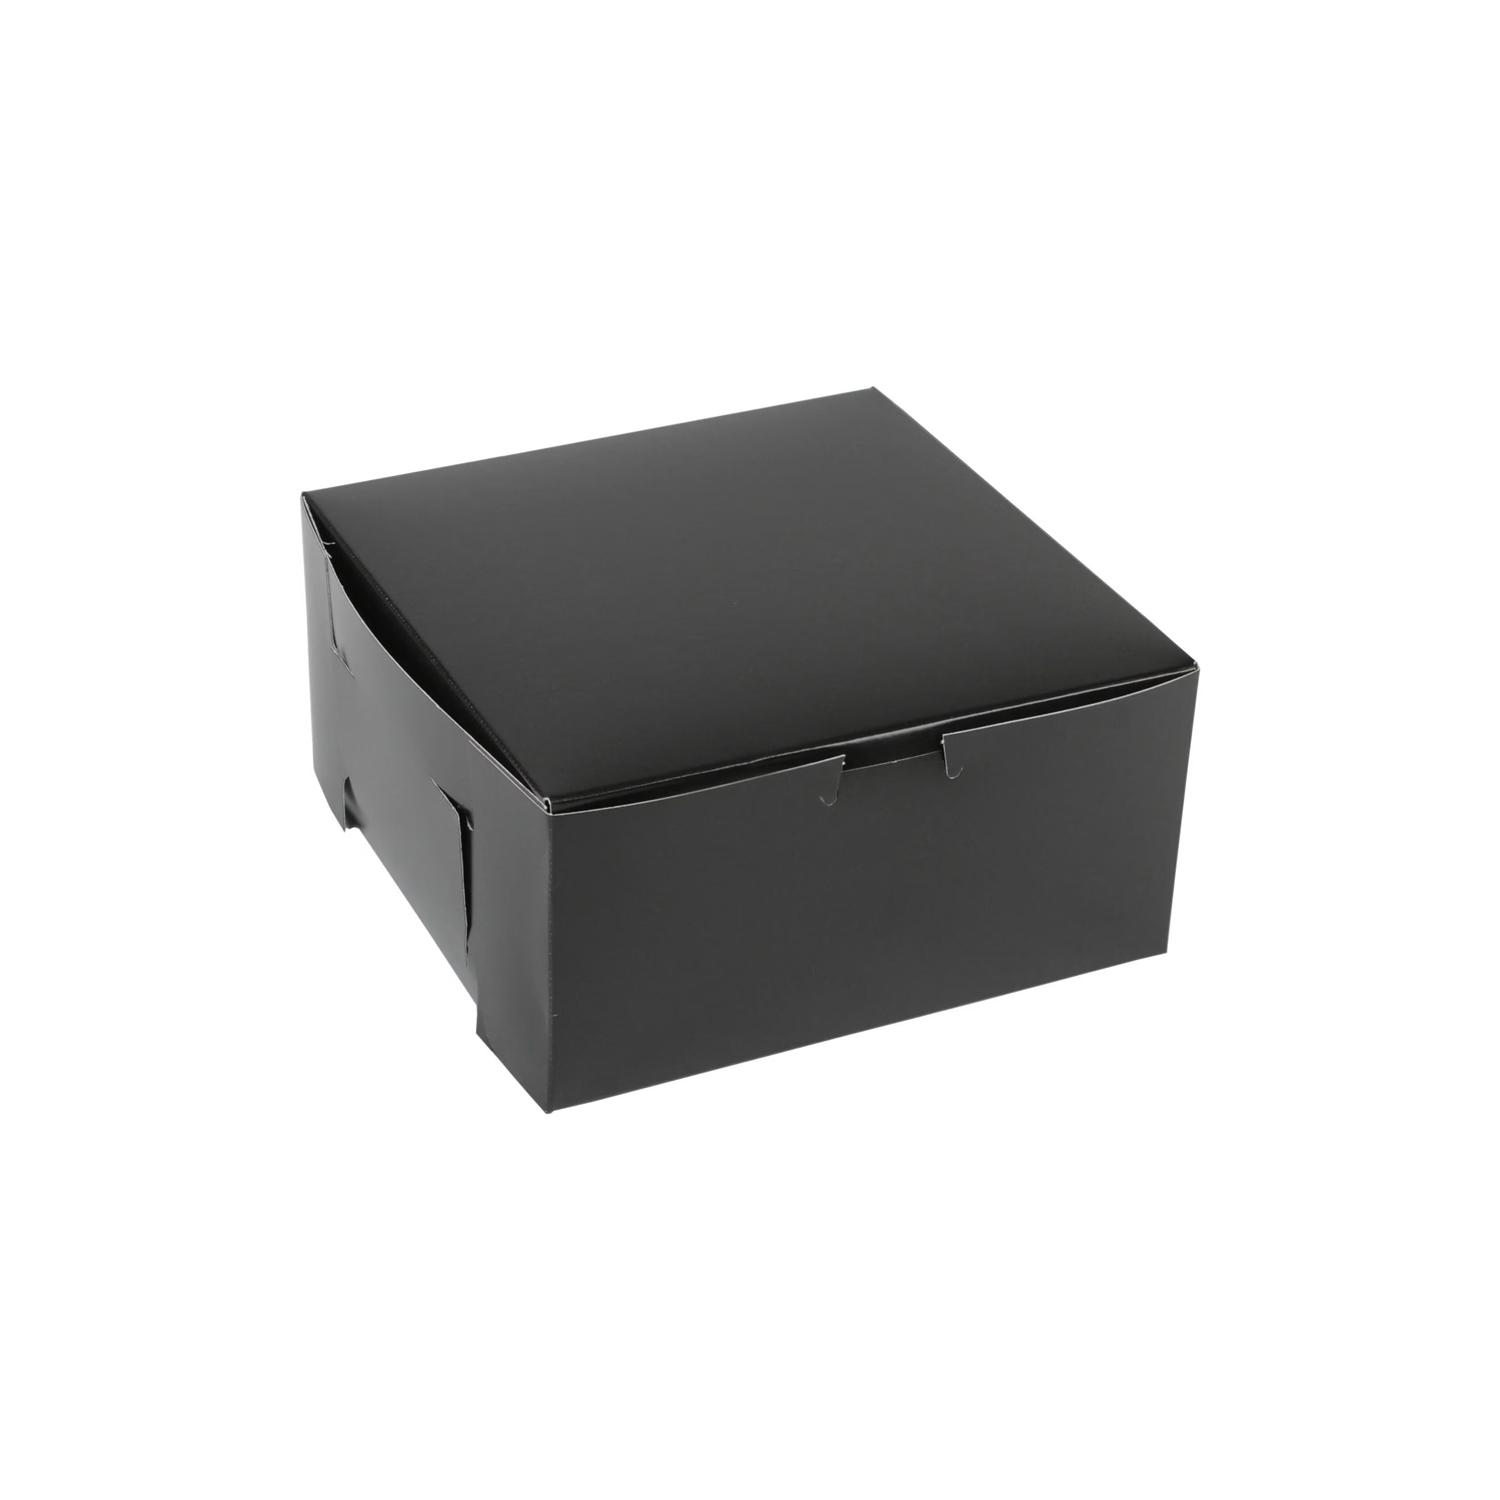 Black 10 x 10 x 4 Inches Cake Box